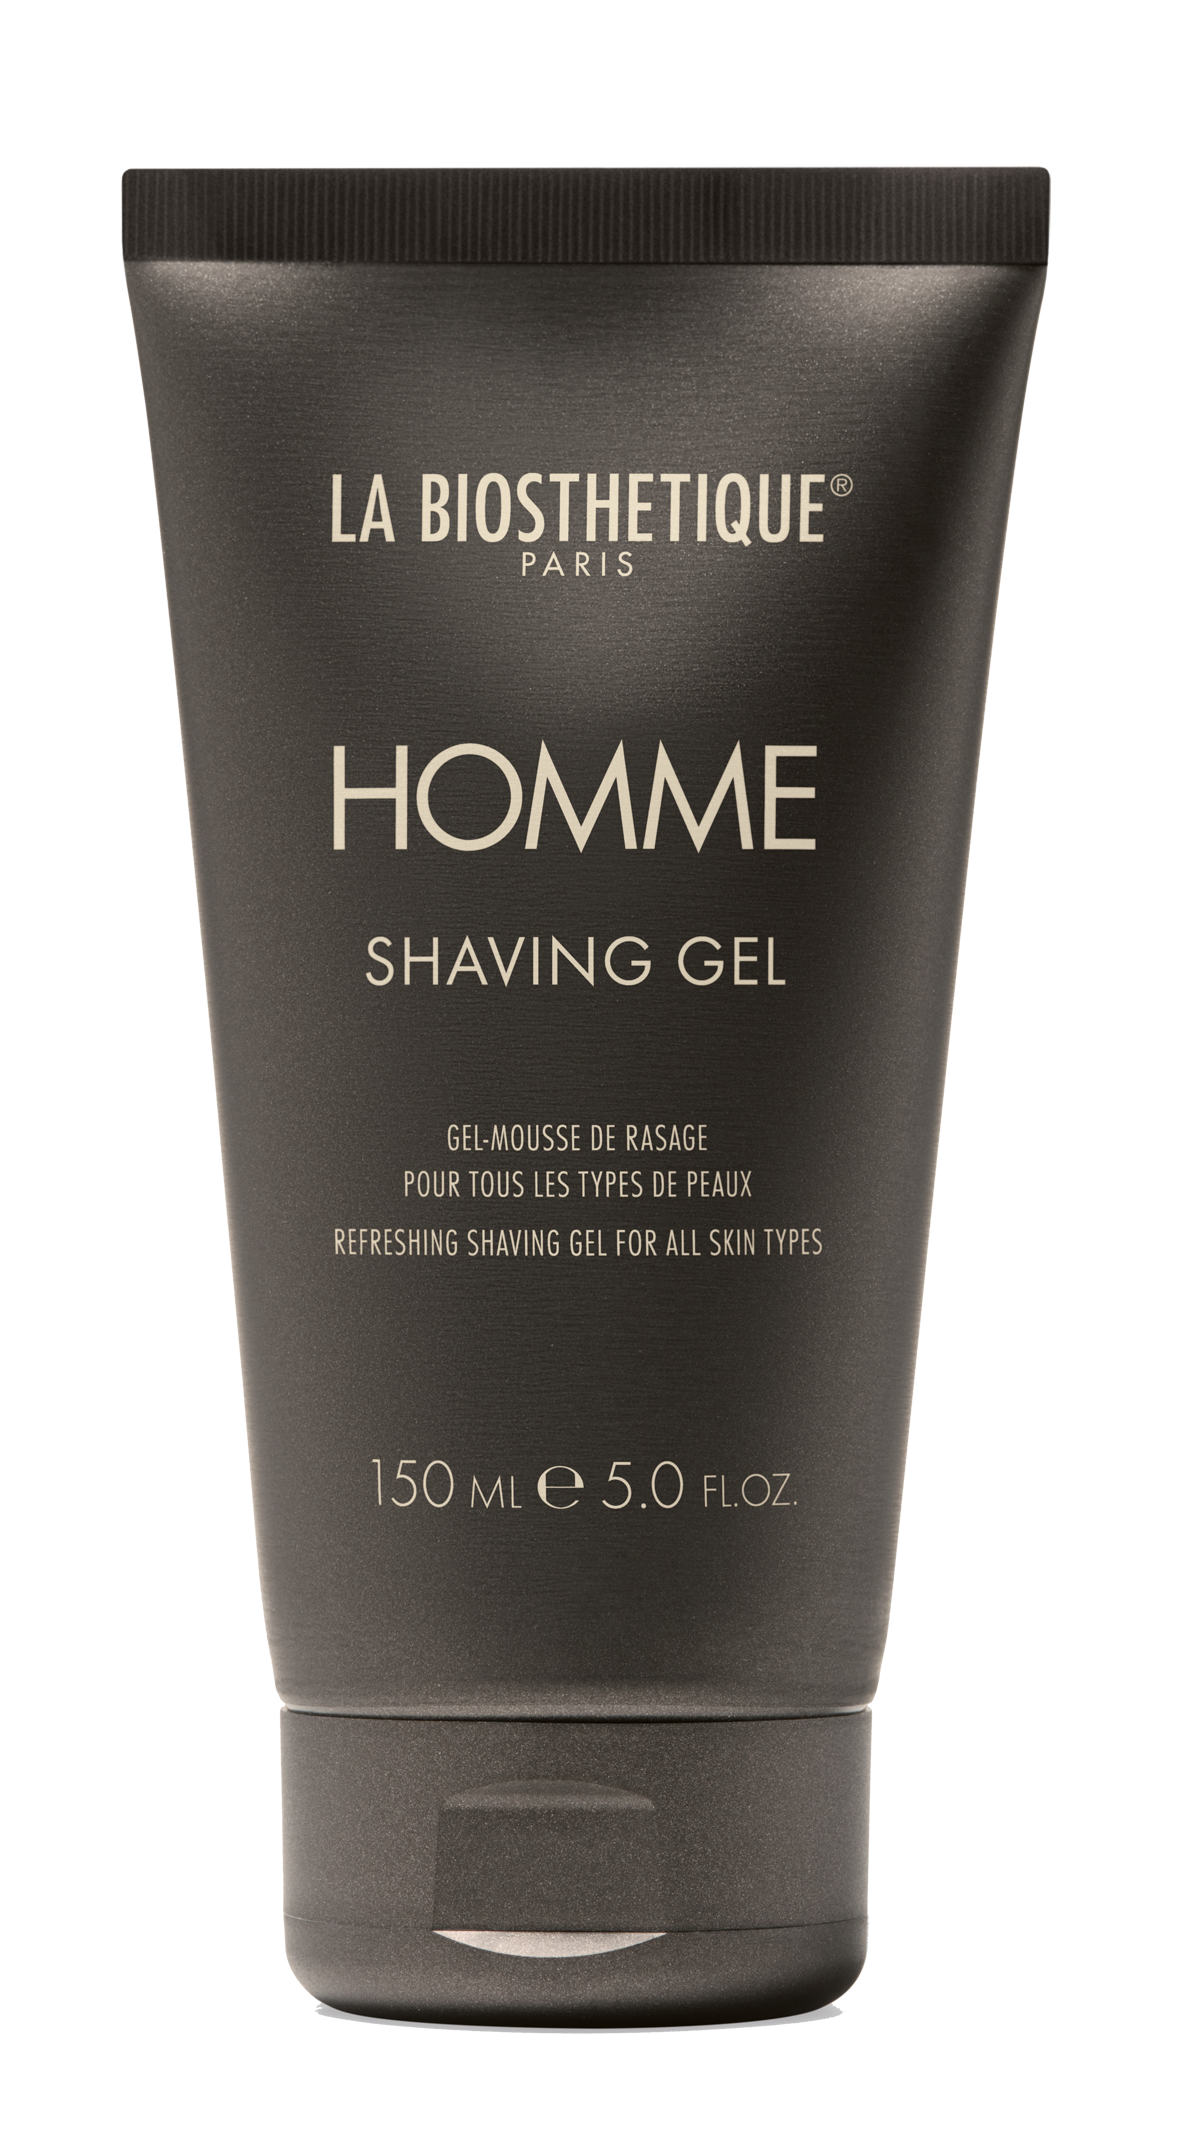 Homme Shaving Gel by La Biosthetique Paris Shave and Care Collection